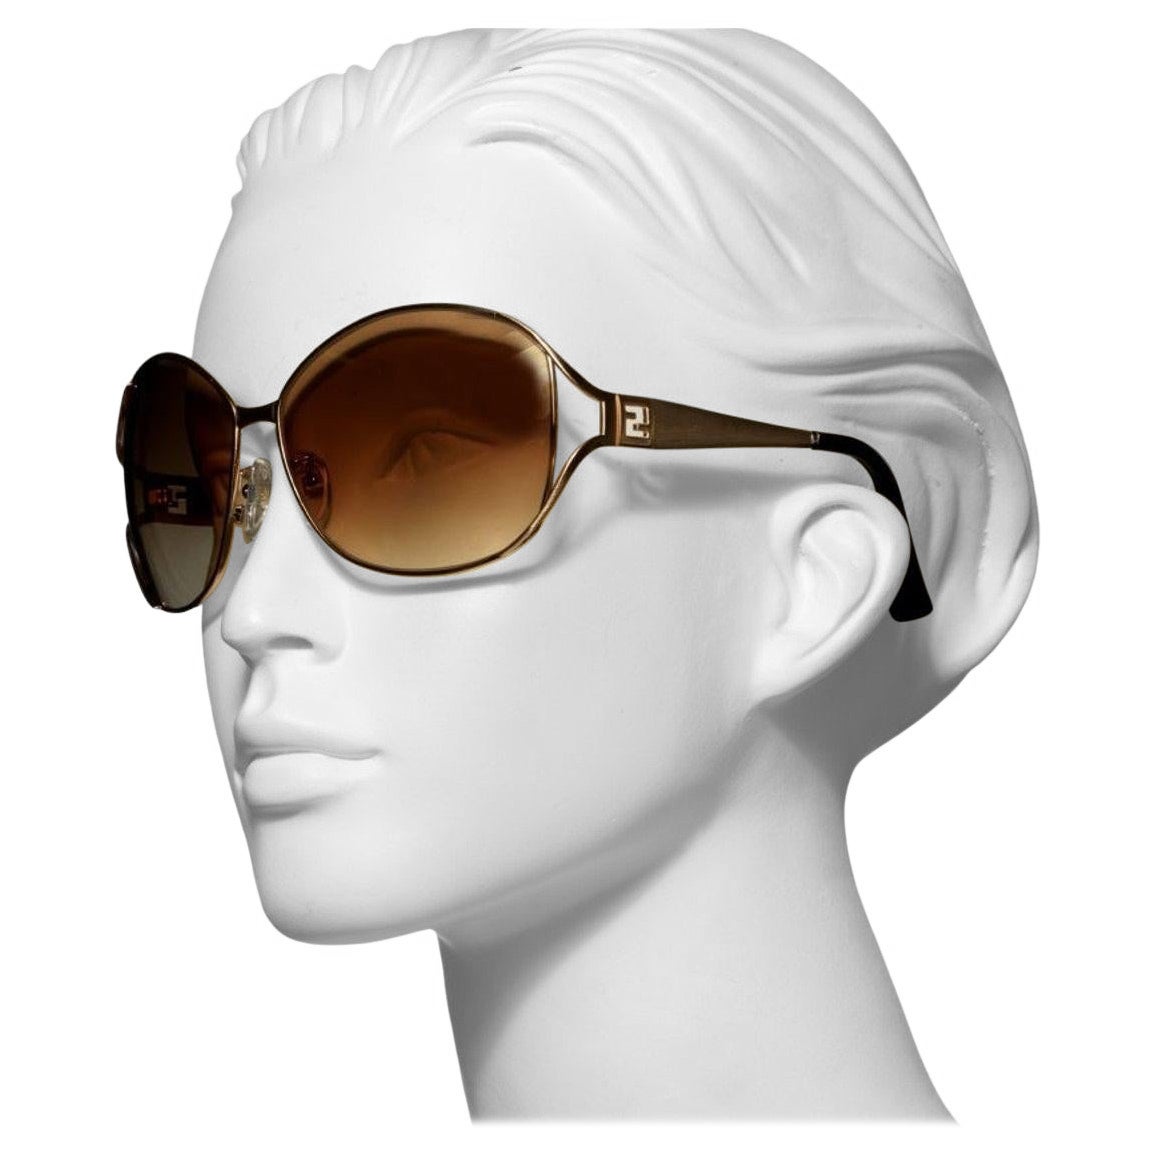 New Fendi Gold Aviator Sunglasses with Case